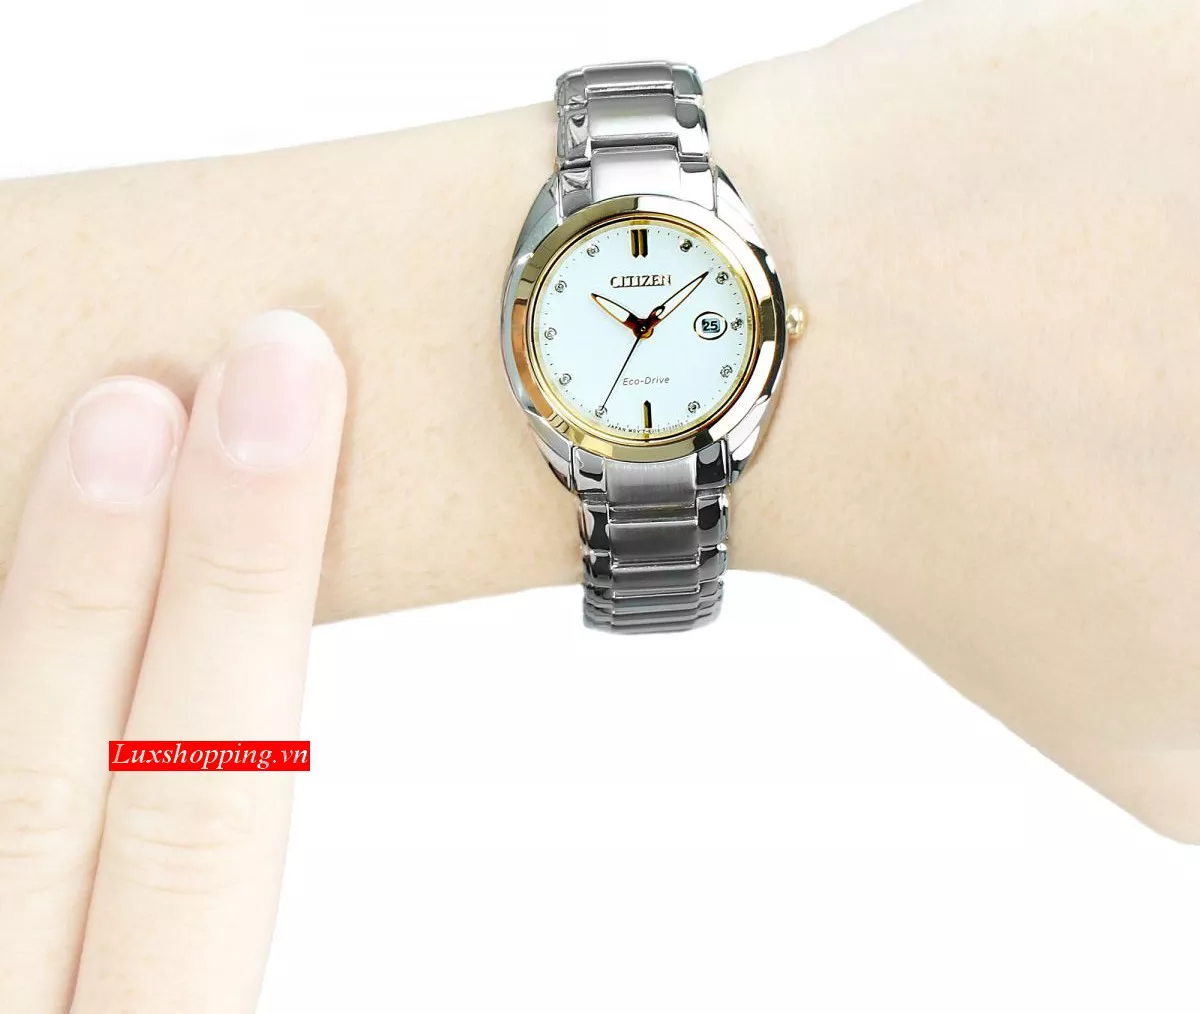  Citizen Celestial Diamond Two-Tone Watch 27mm